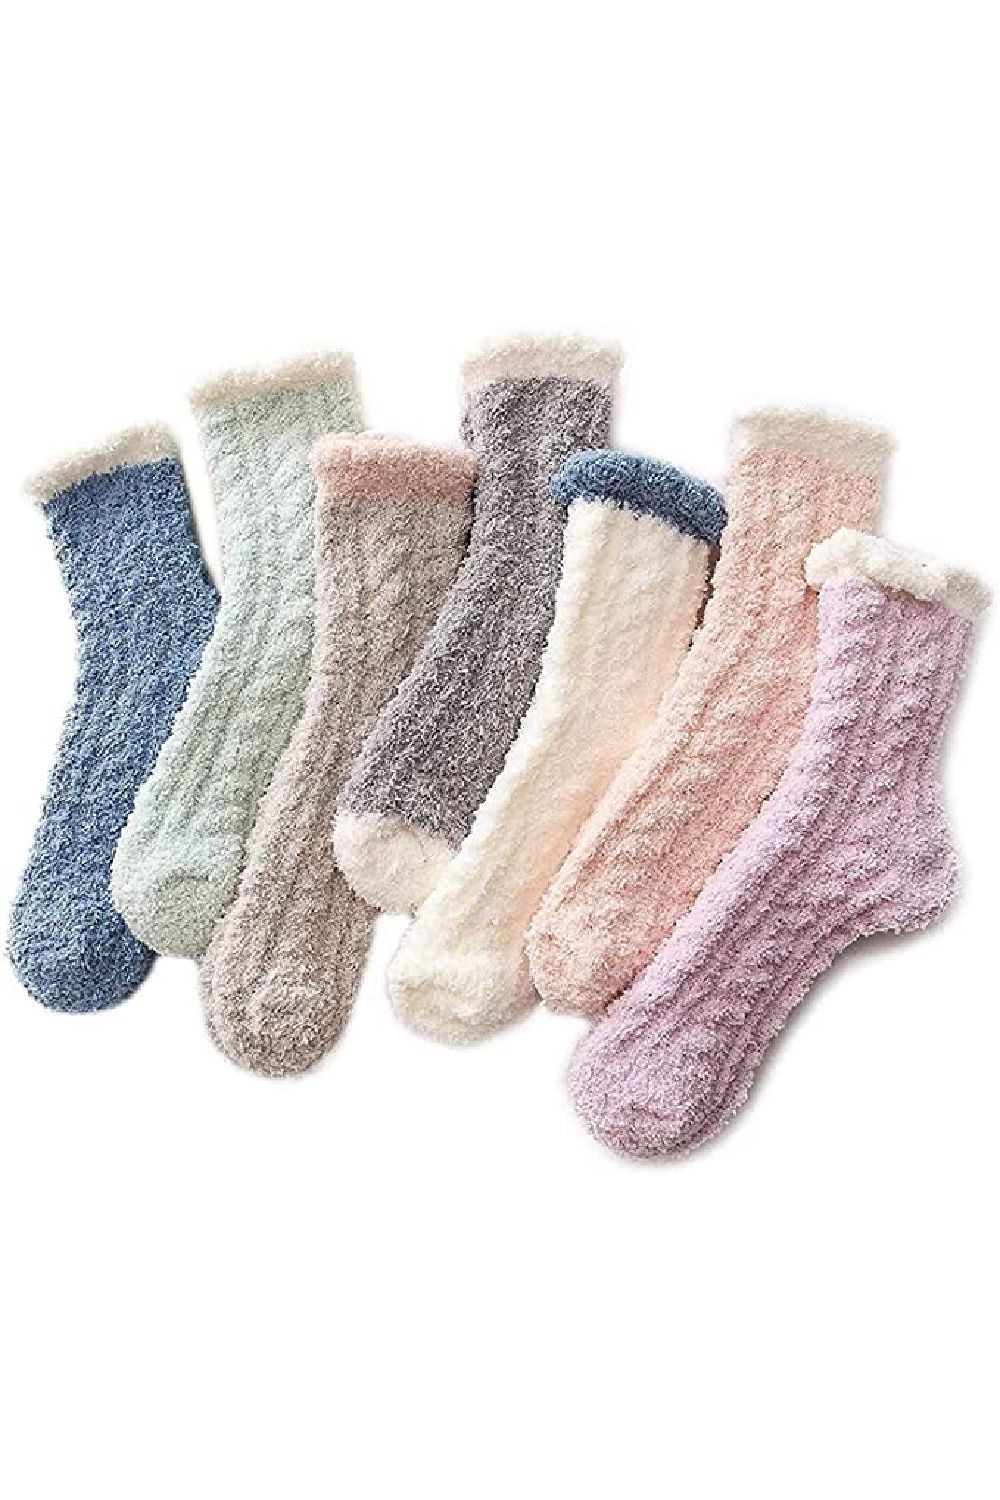 Women's Fuzzy Slipper Socks Cozy Super Soft Plush Thick Winter Fleece Bed Socks 